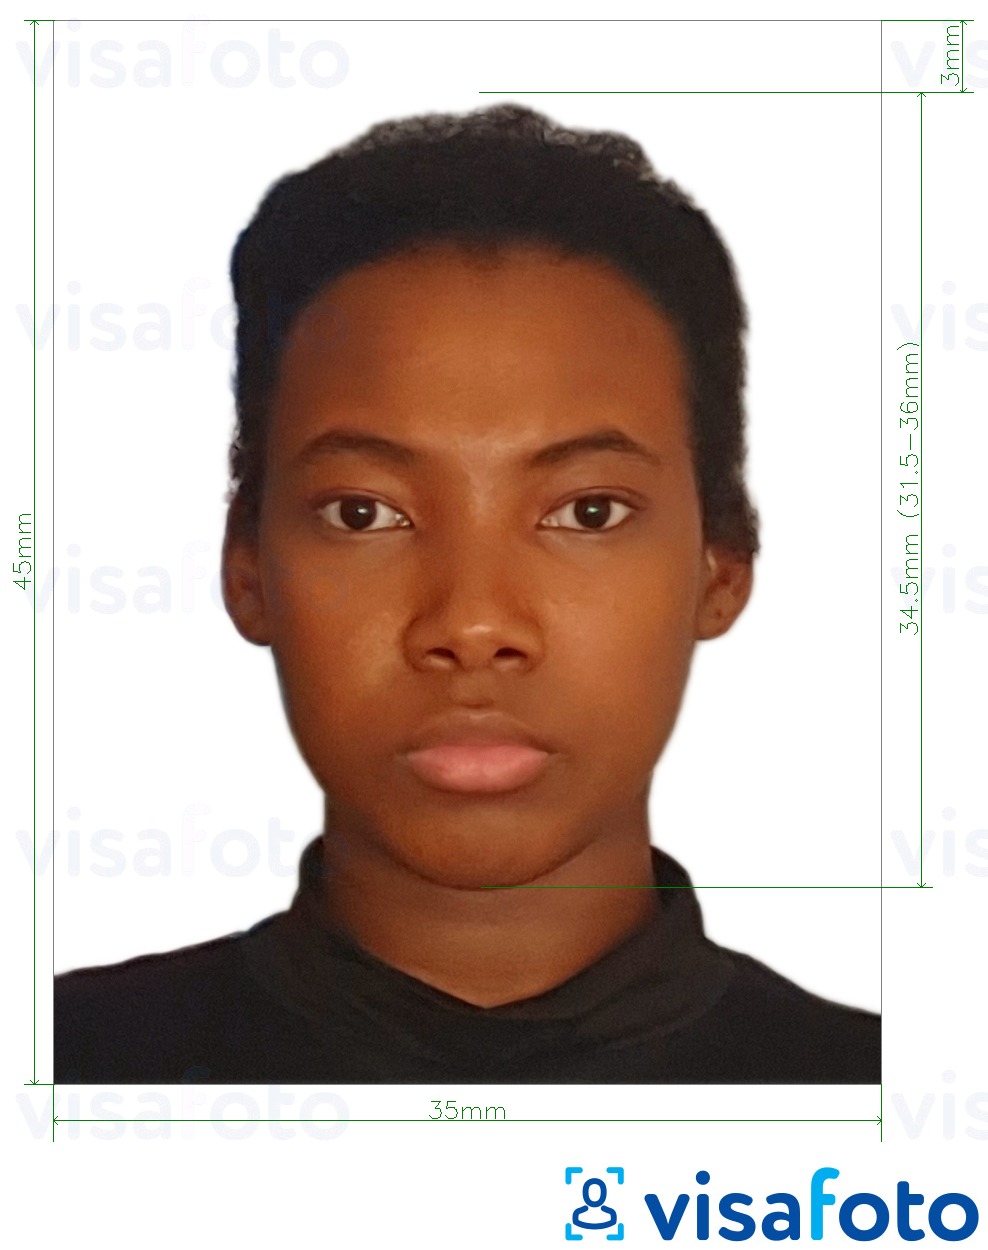 Nigeria visa photo